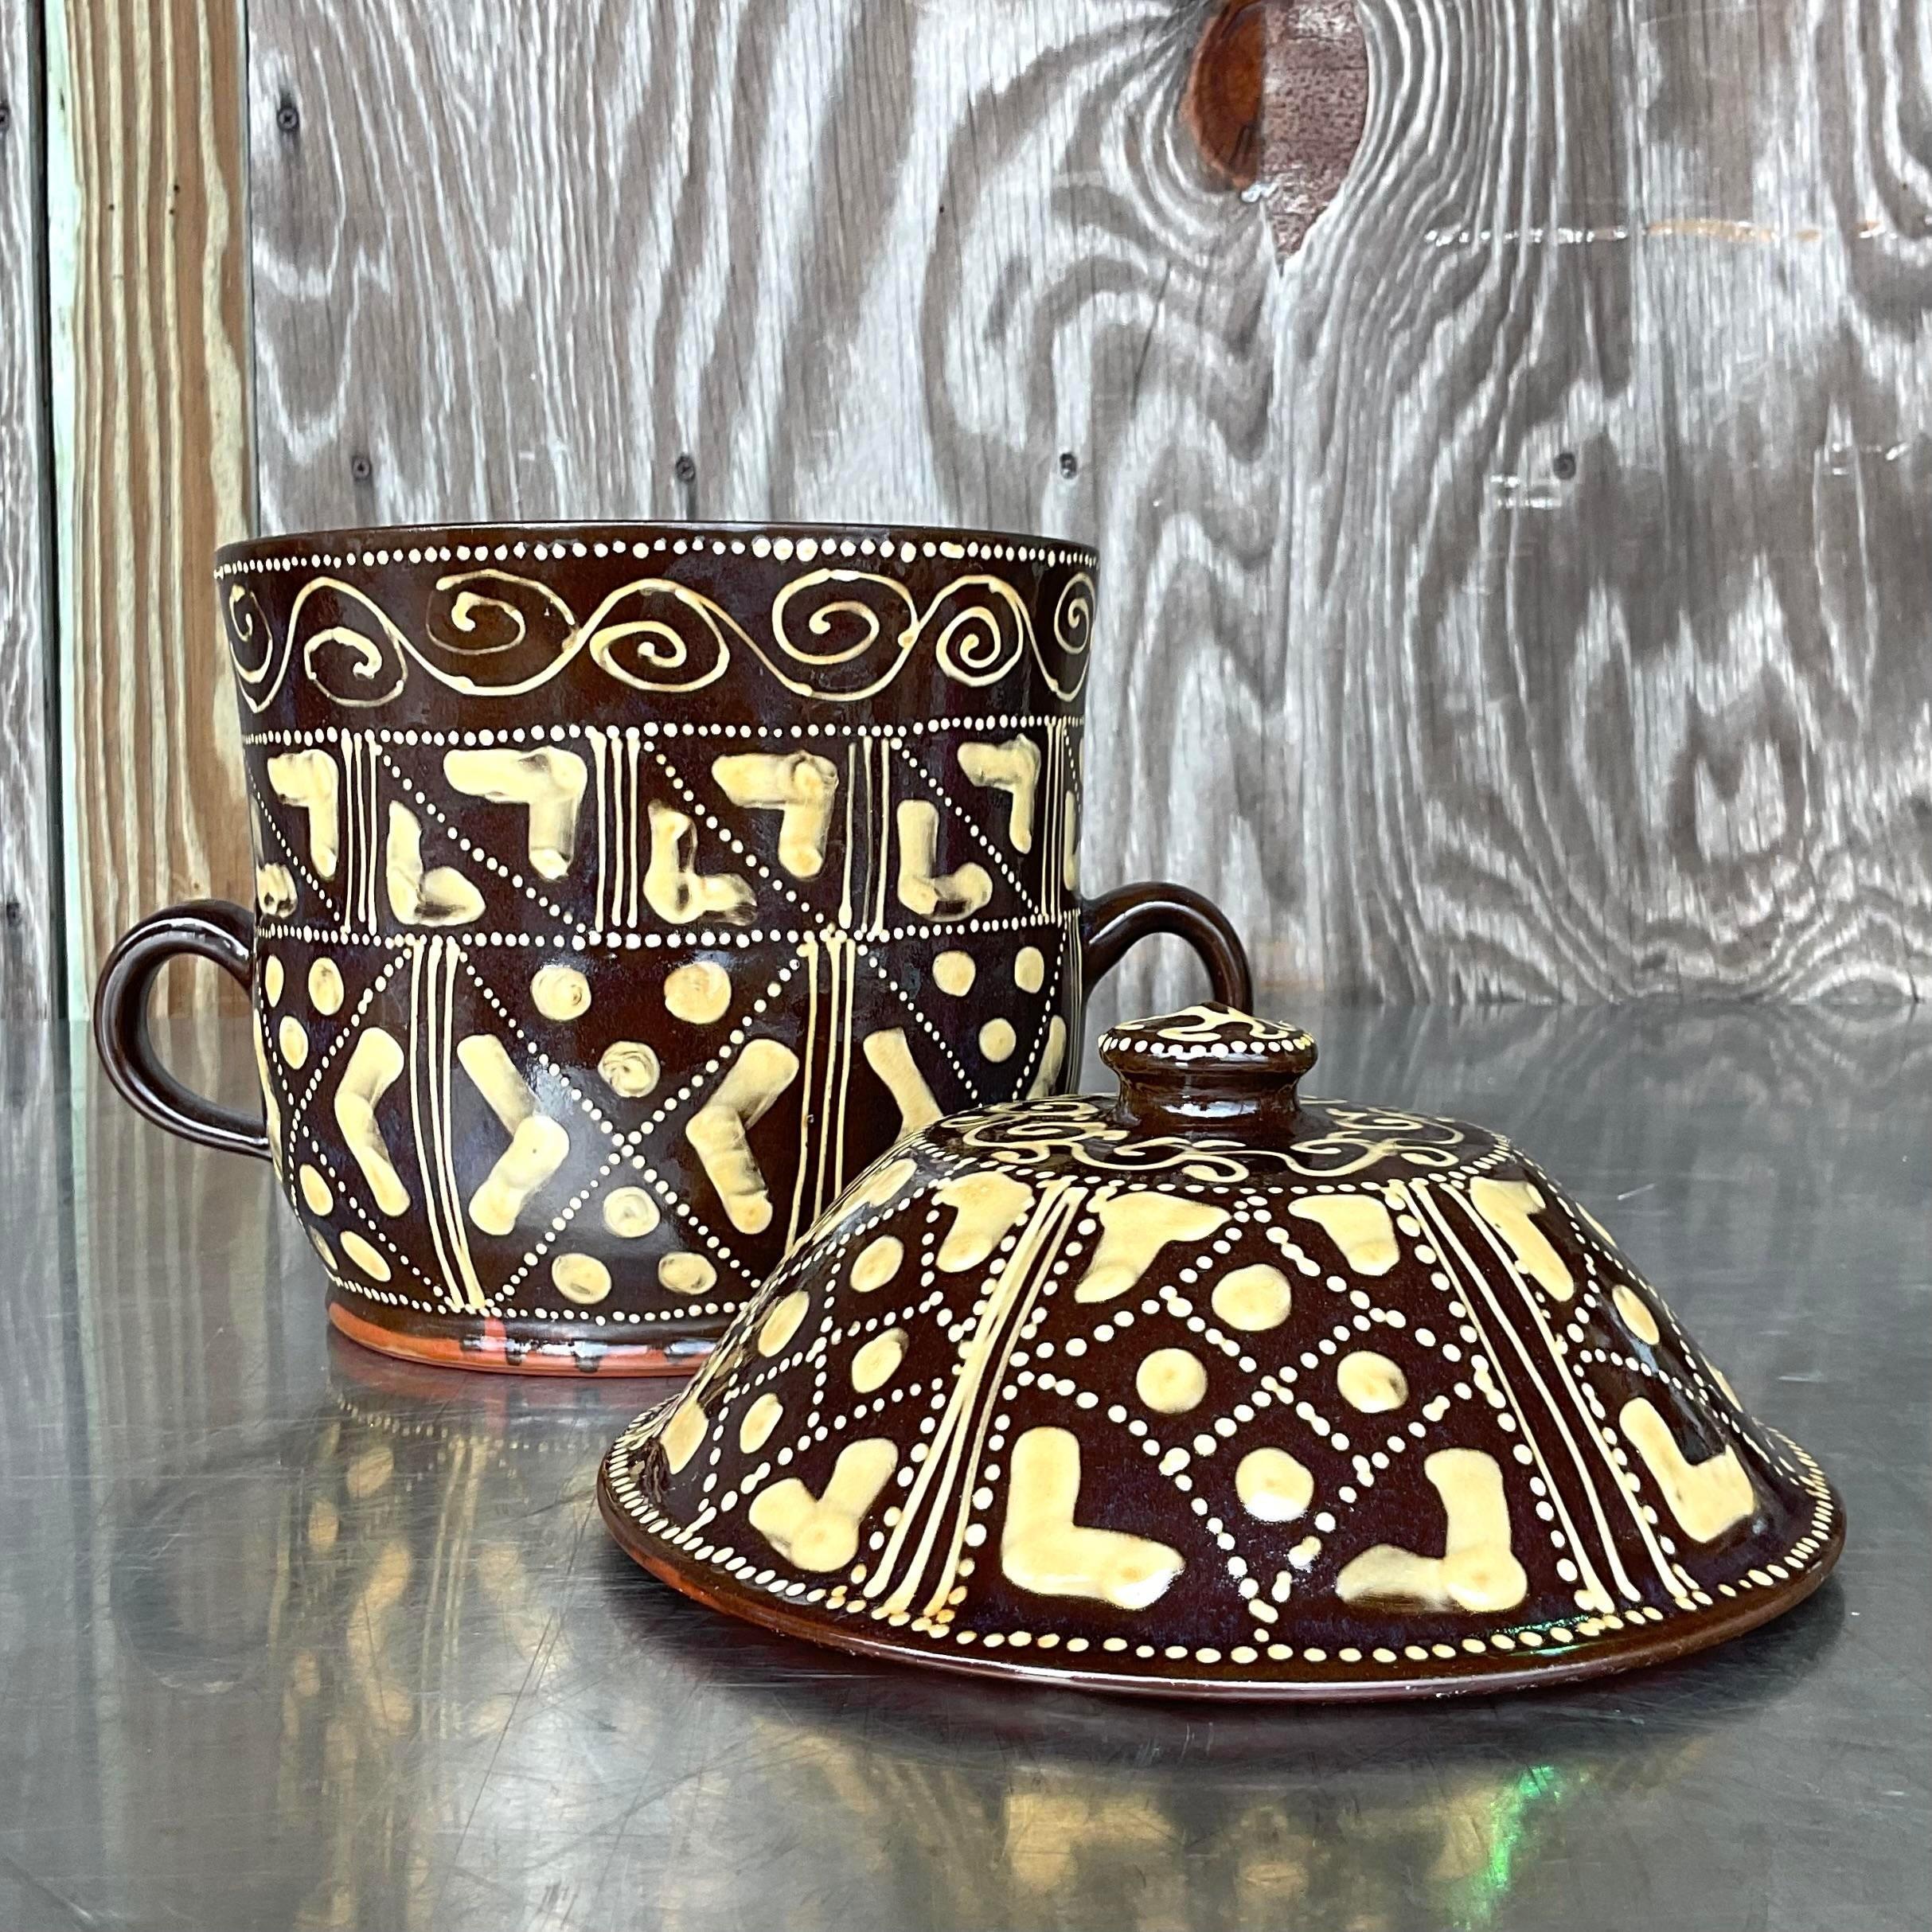 British Vintage Boho Hand Painted Ceramic Chocolate Pot For Sale